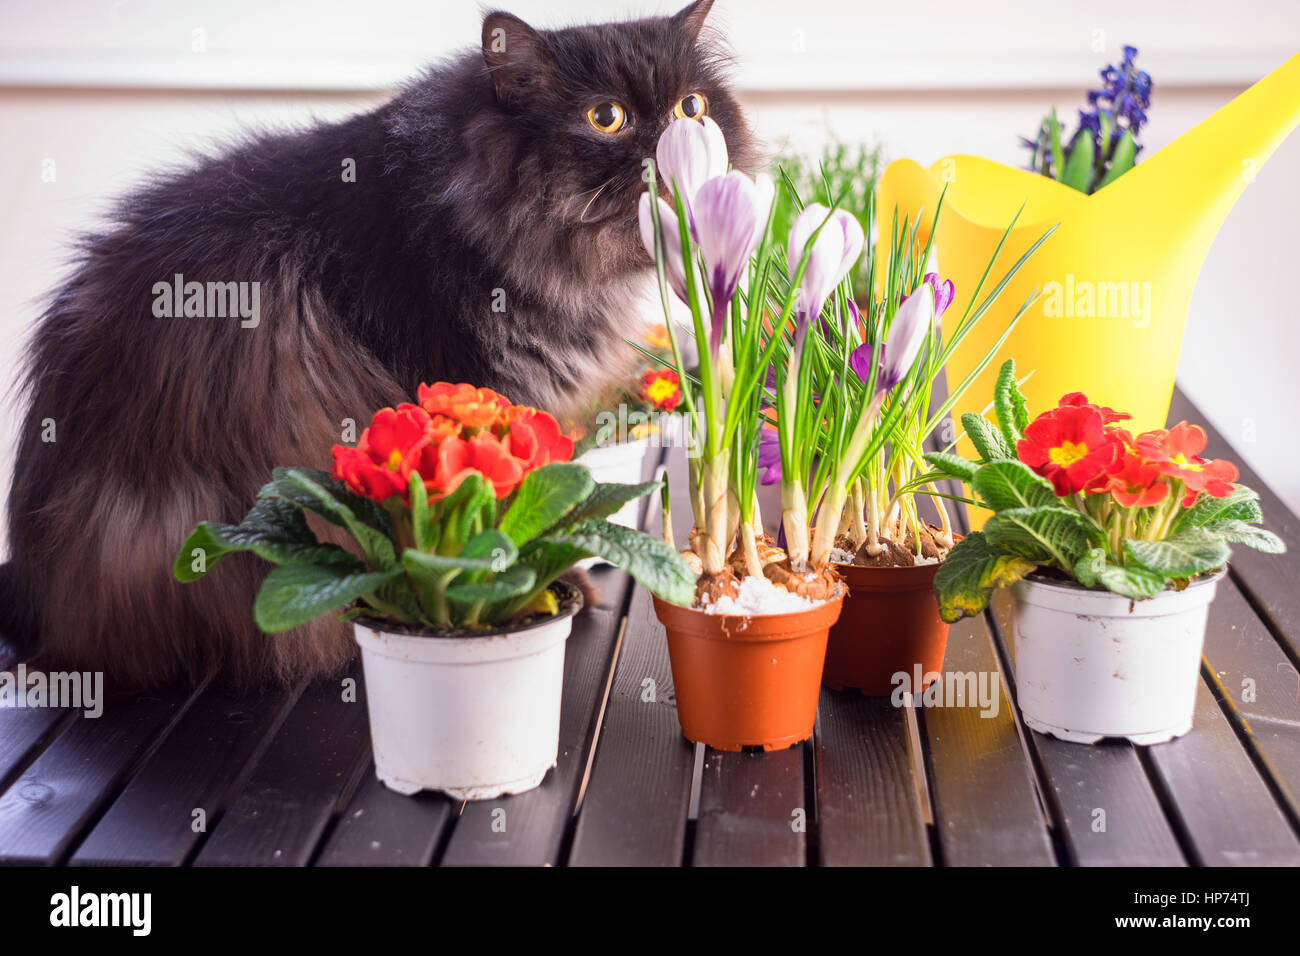 A black cat near flowers. Stock Photo